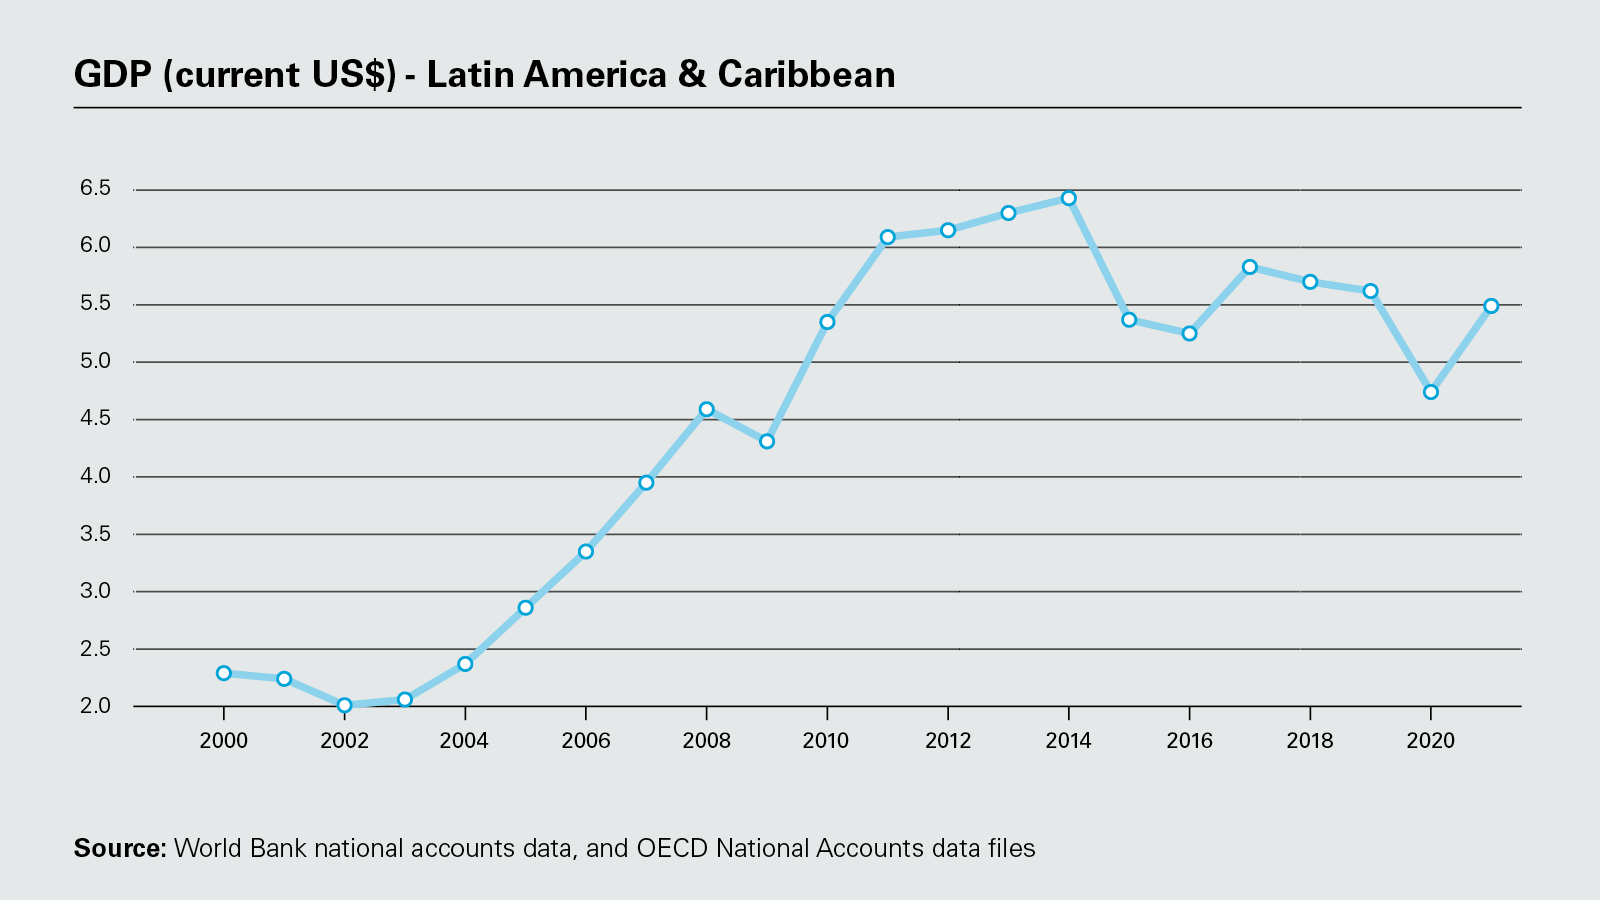 GDP (current US$) - Latin America & Caribbean